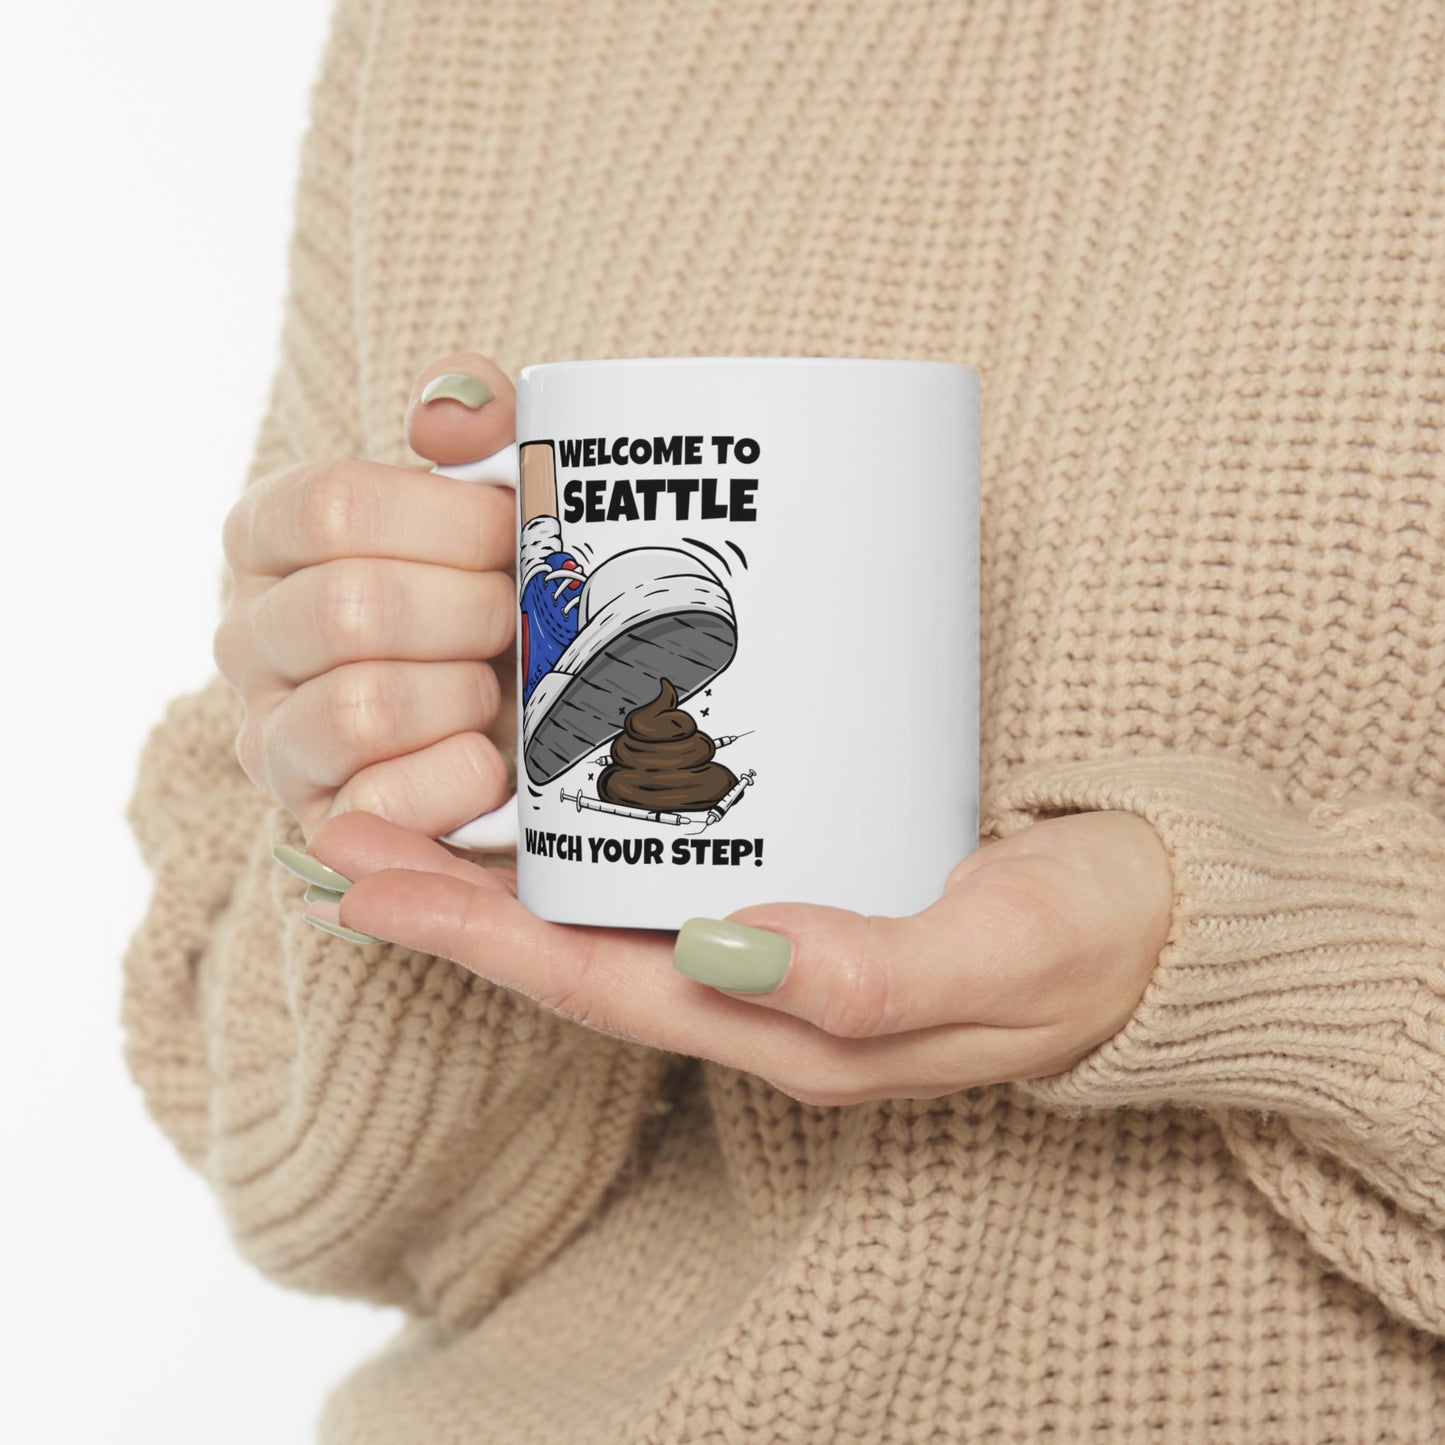 Welcome to Seattle | Ceramic Mug 11oz